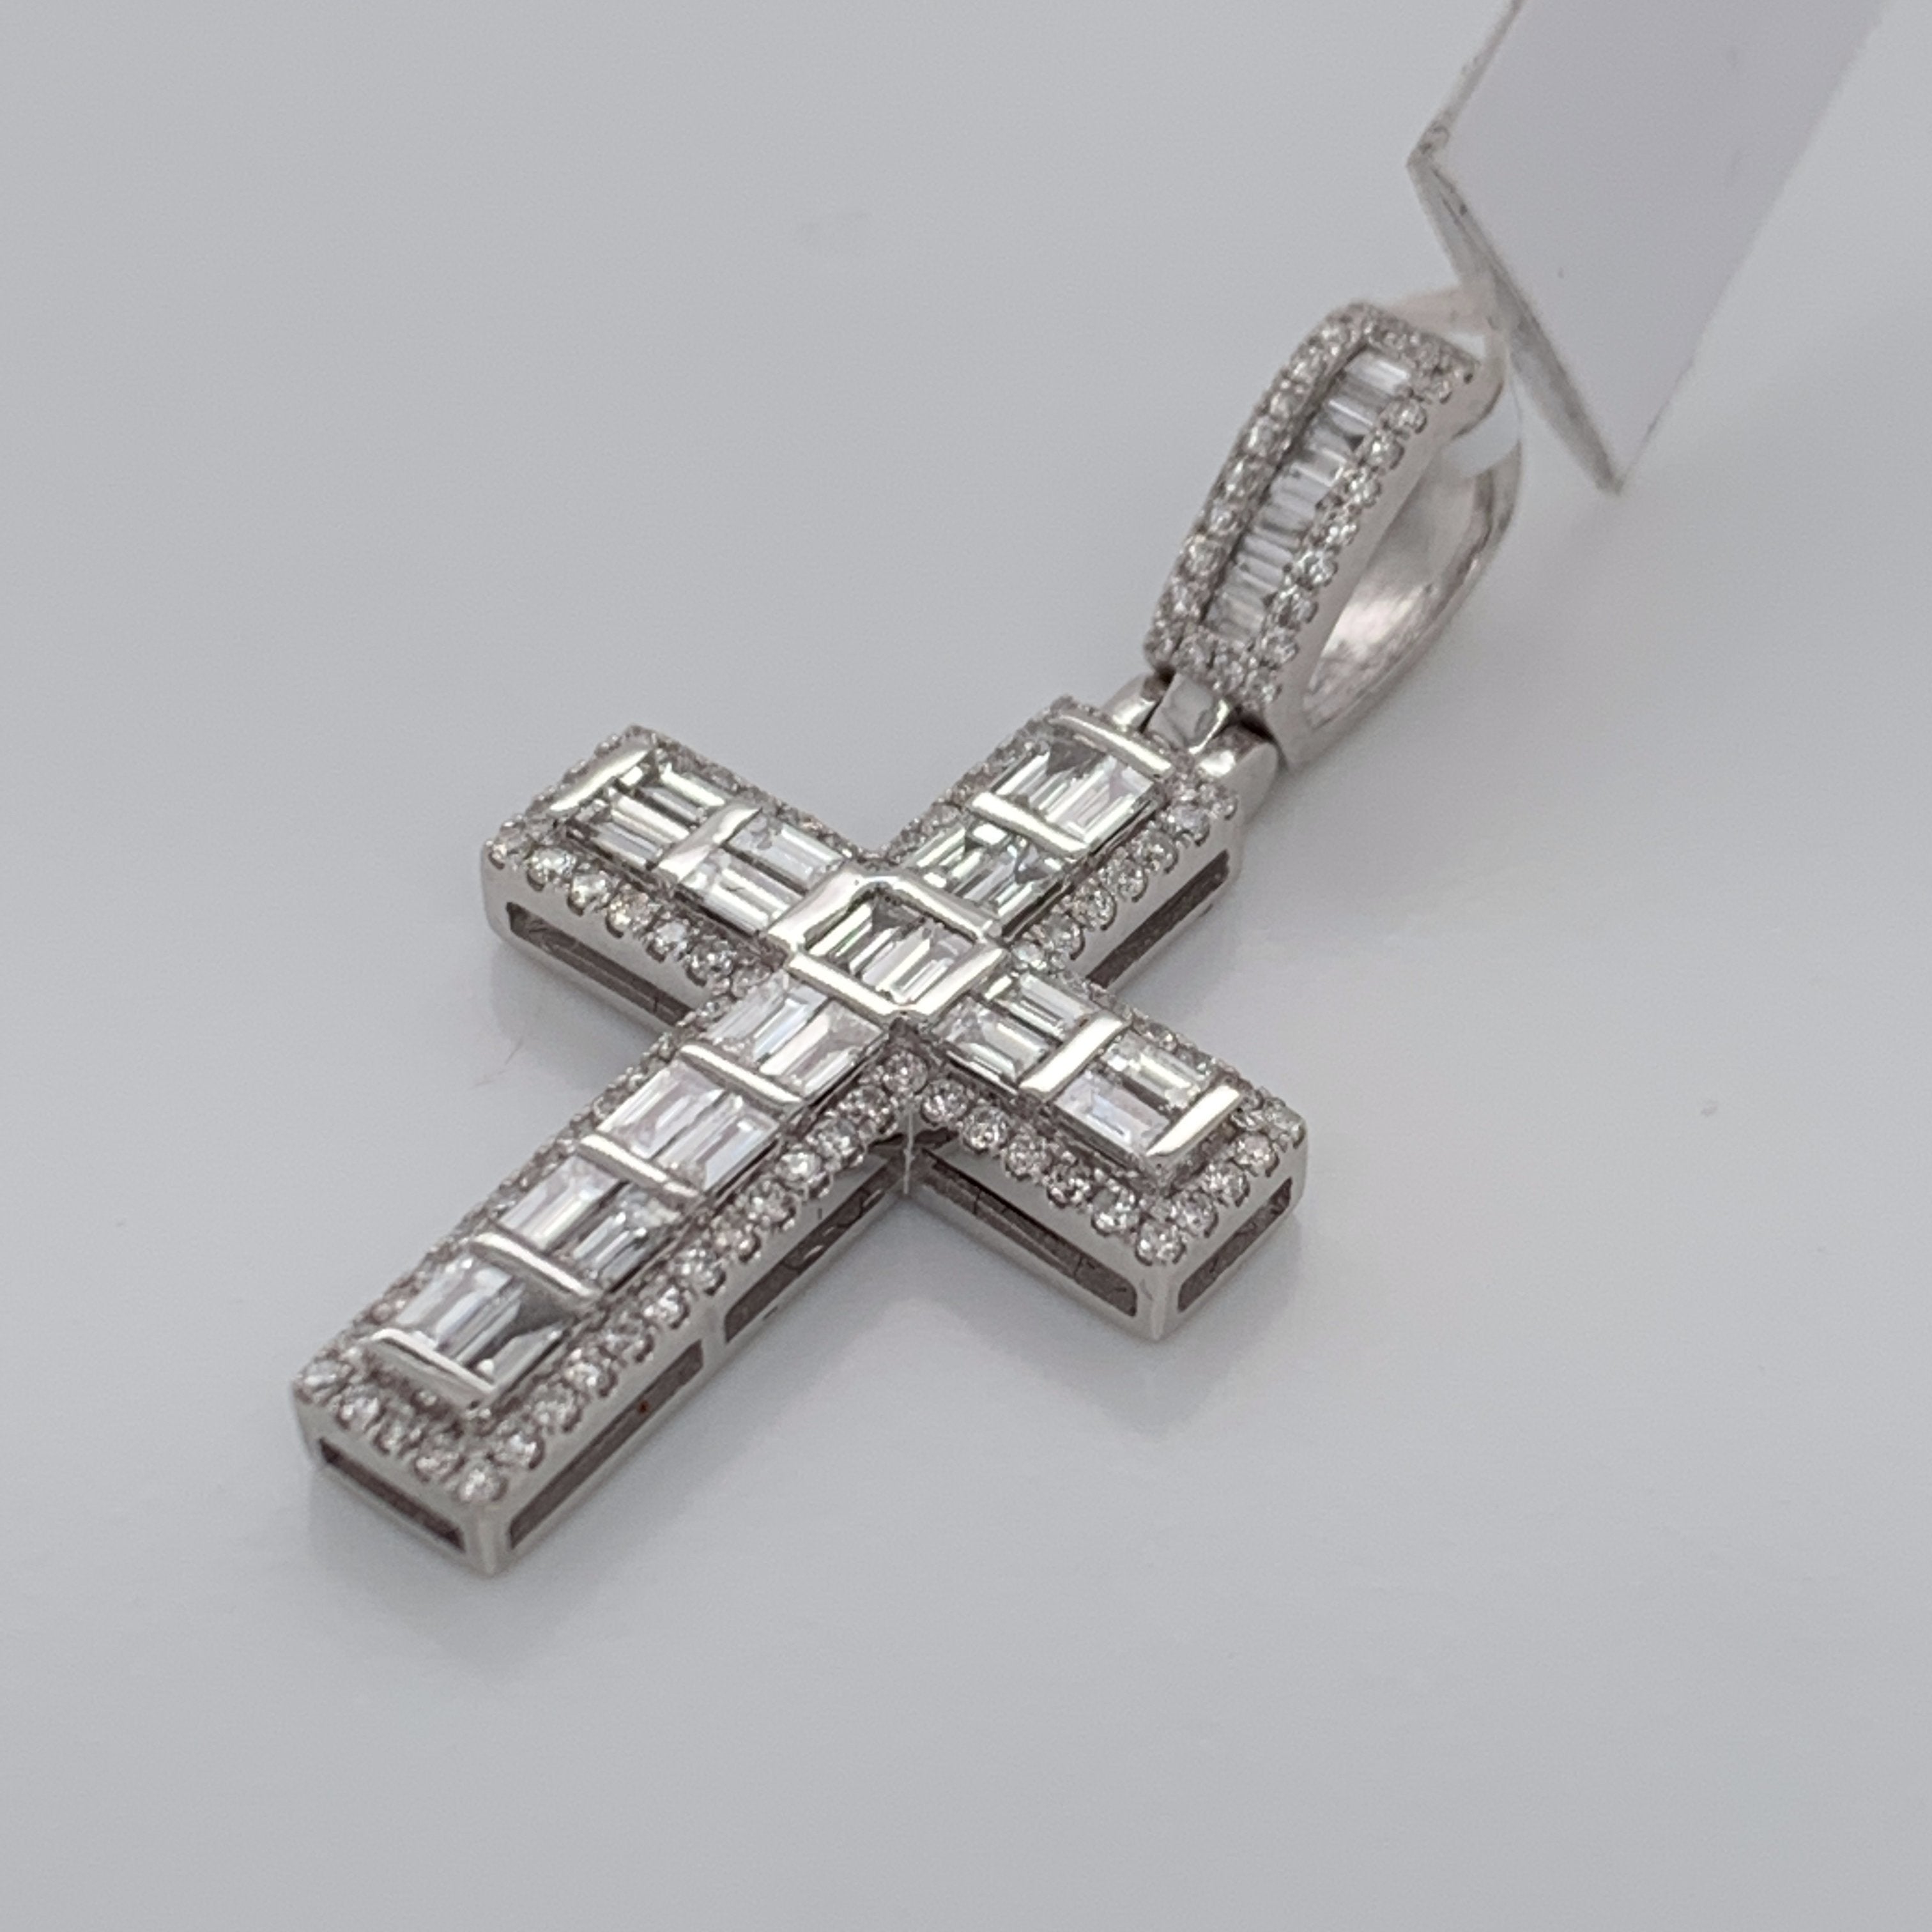 1.14CT Diamond Cross Pendant in 14K White Gold - White Carat Diamonds 